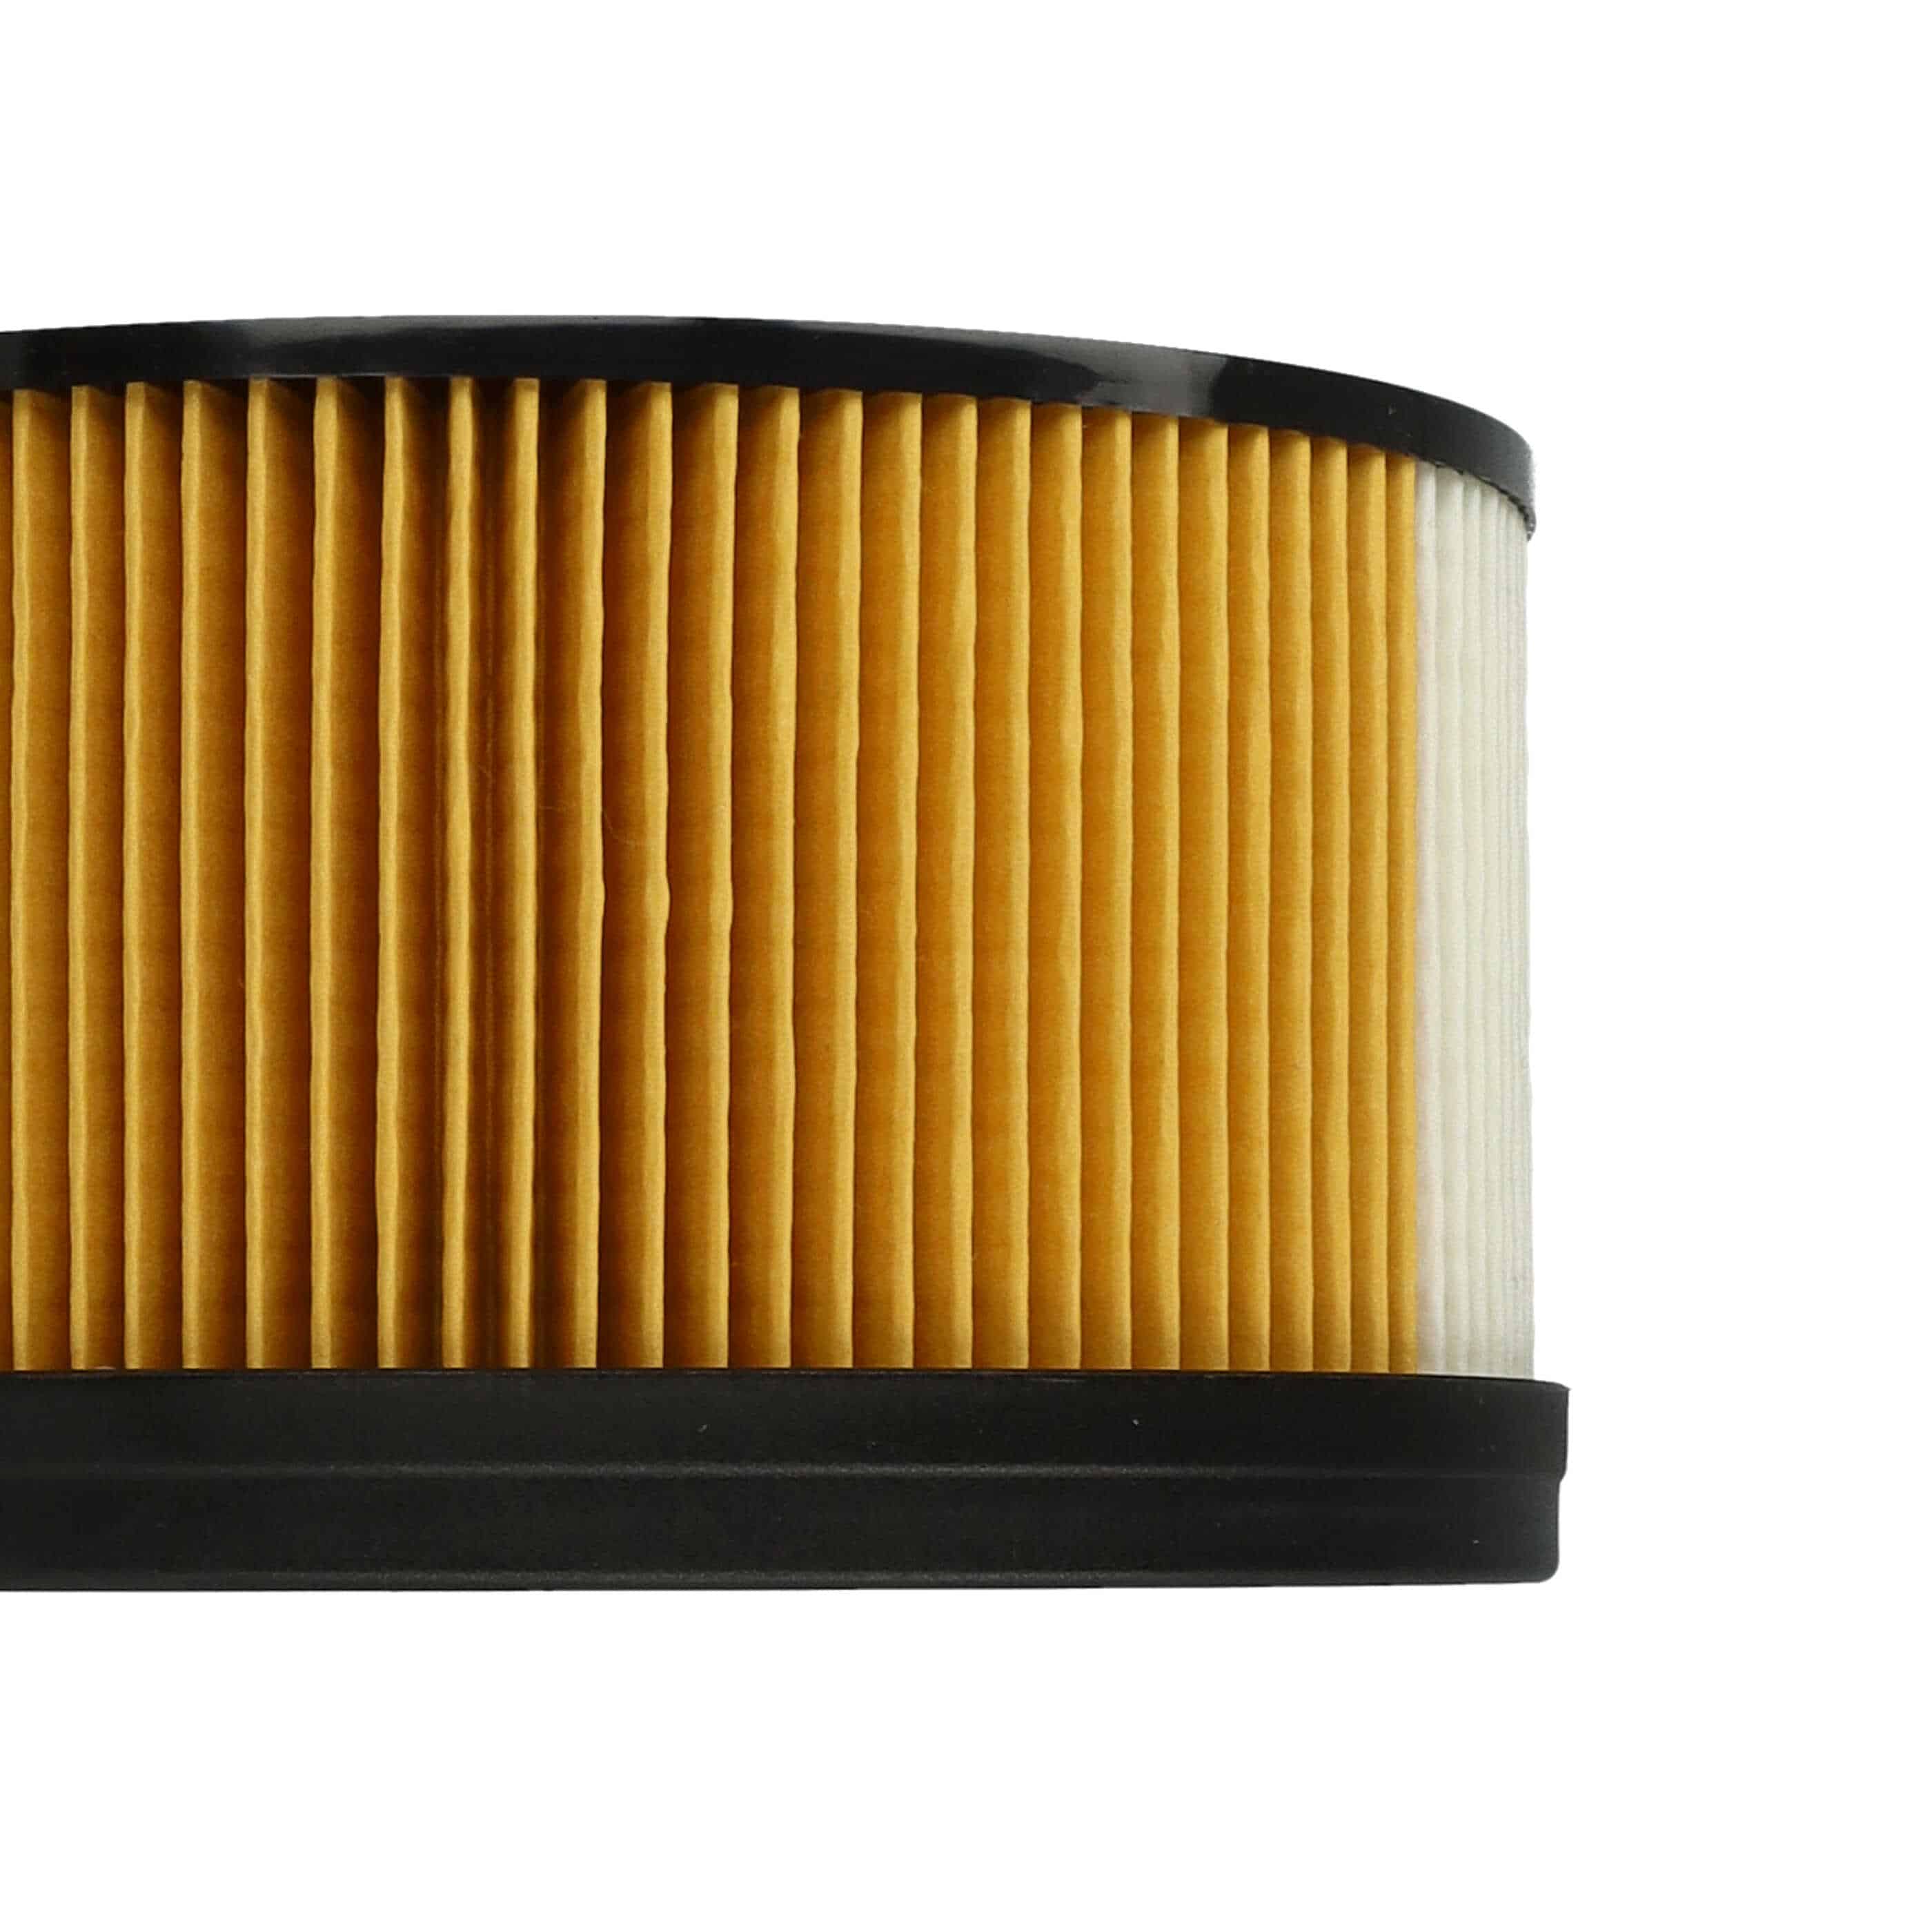 Filtro reemplaza Kärcher 6.414-960.0 para aspiradora filtro de cartucho, negro / amarillo